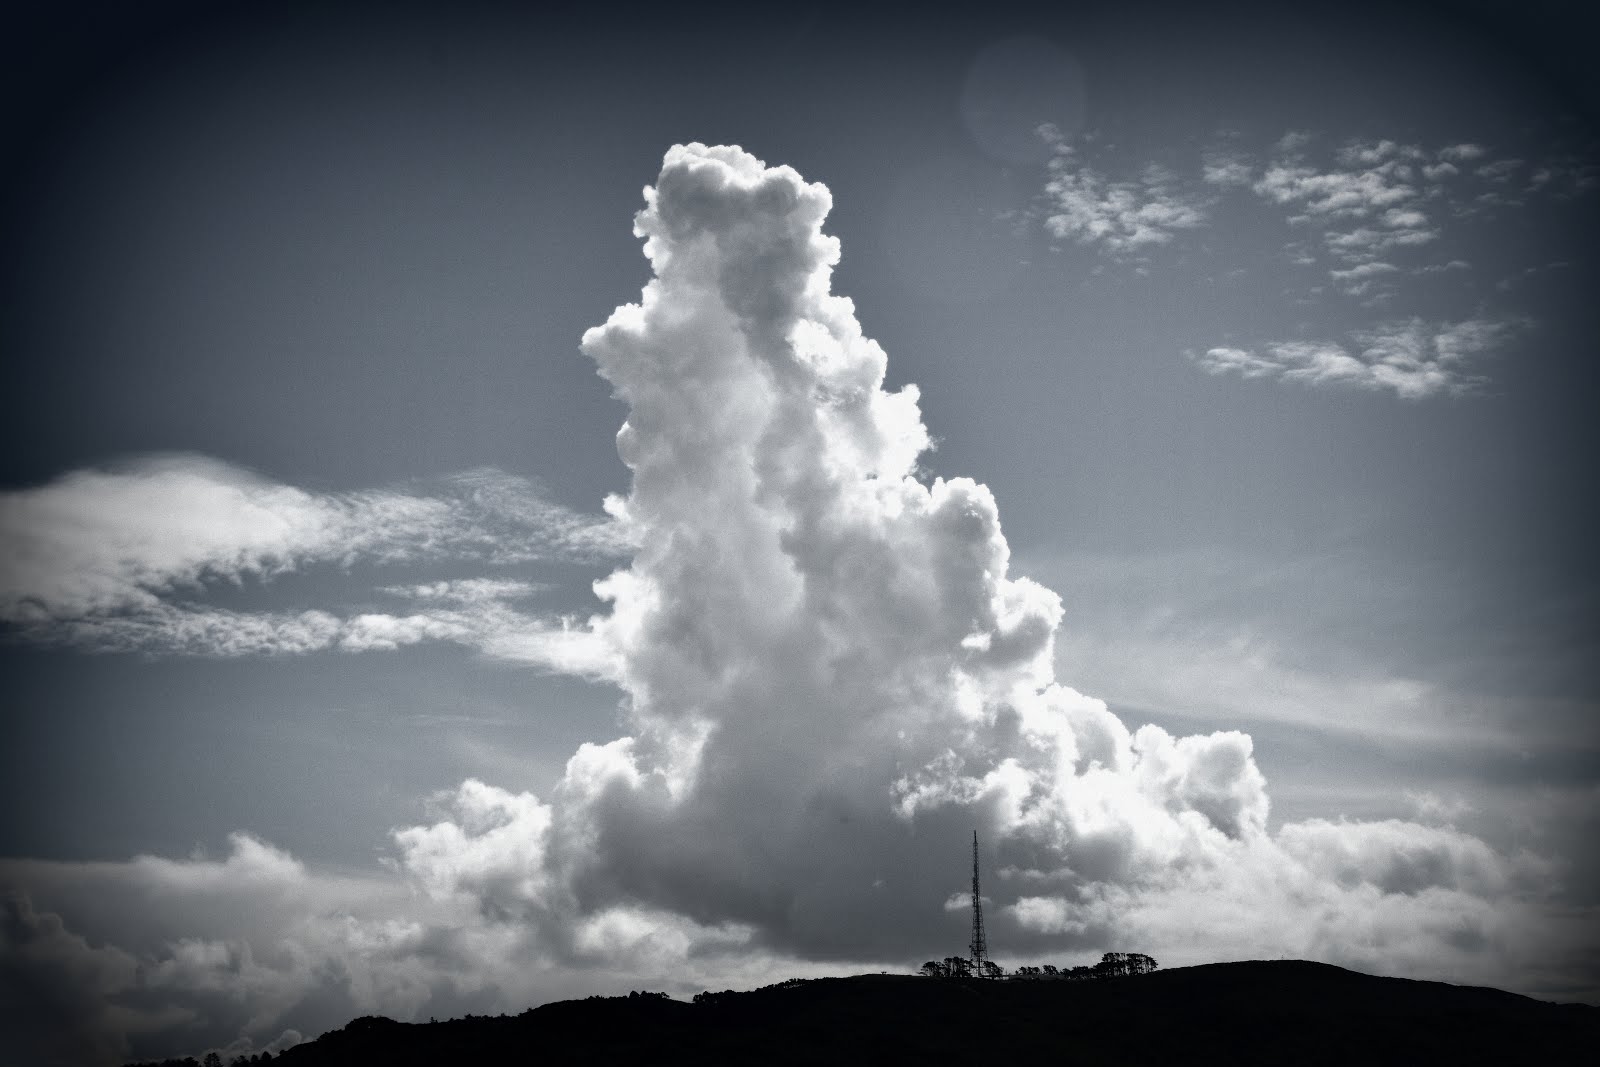 Serious cumulus action behind Mt Kaukau tv tower